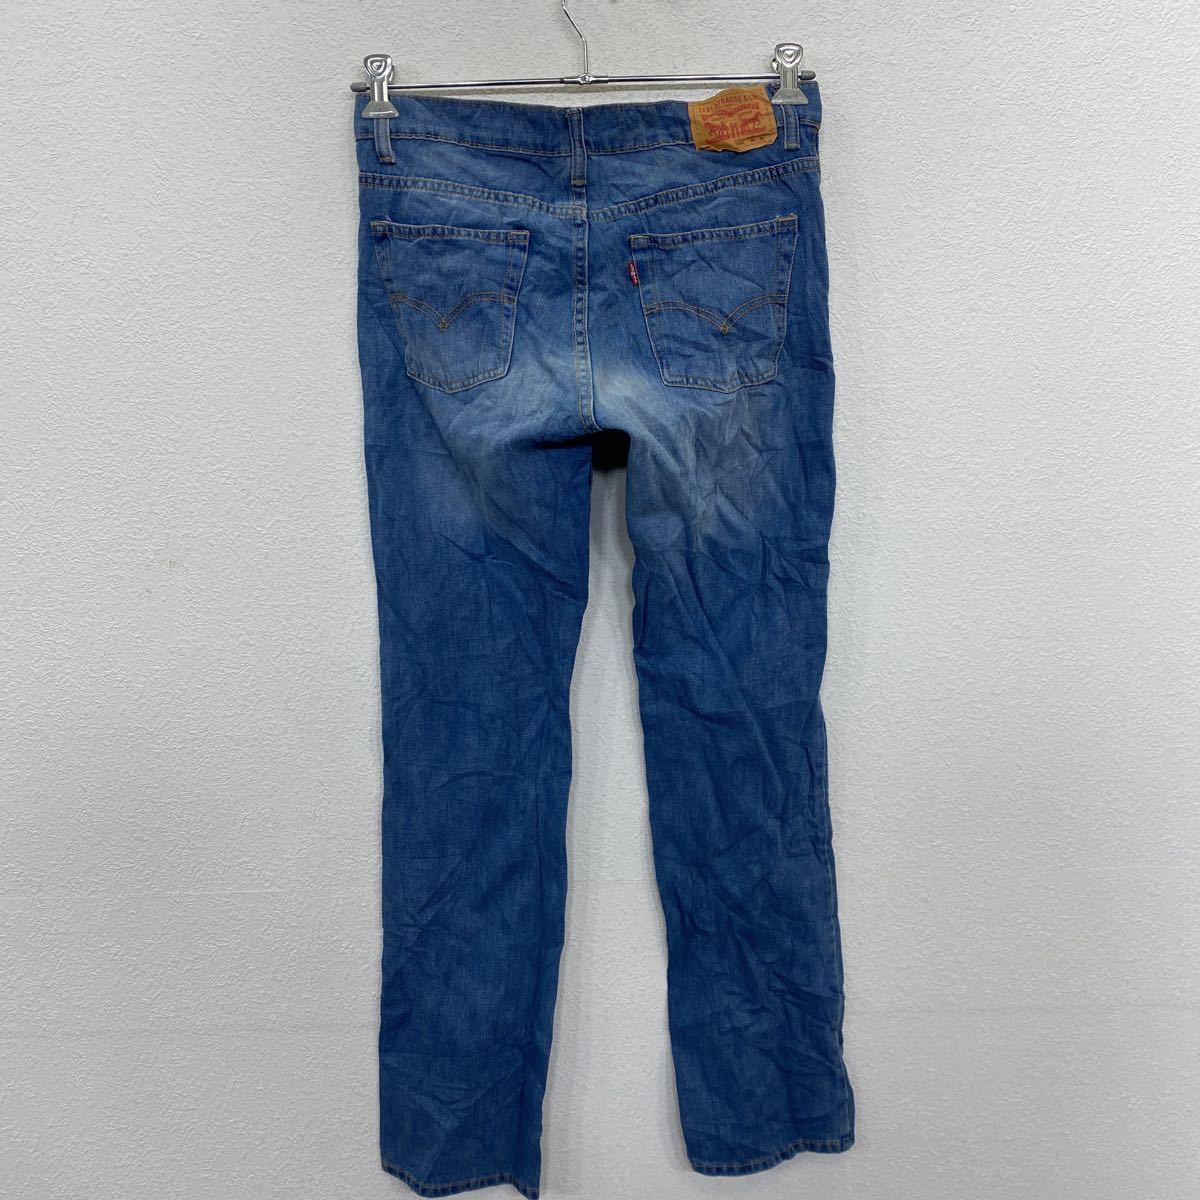 Levi's 511  Denim   брюки   W29  Levi's   тонкий   индиго  голубой  бу одежда ...  Америка ... 2302-881